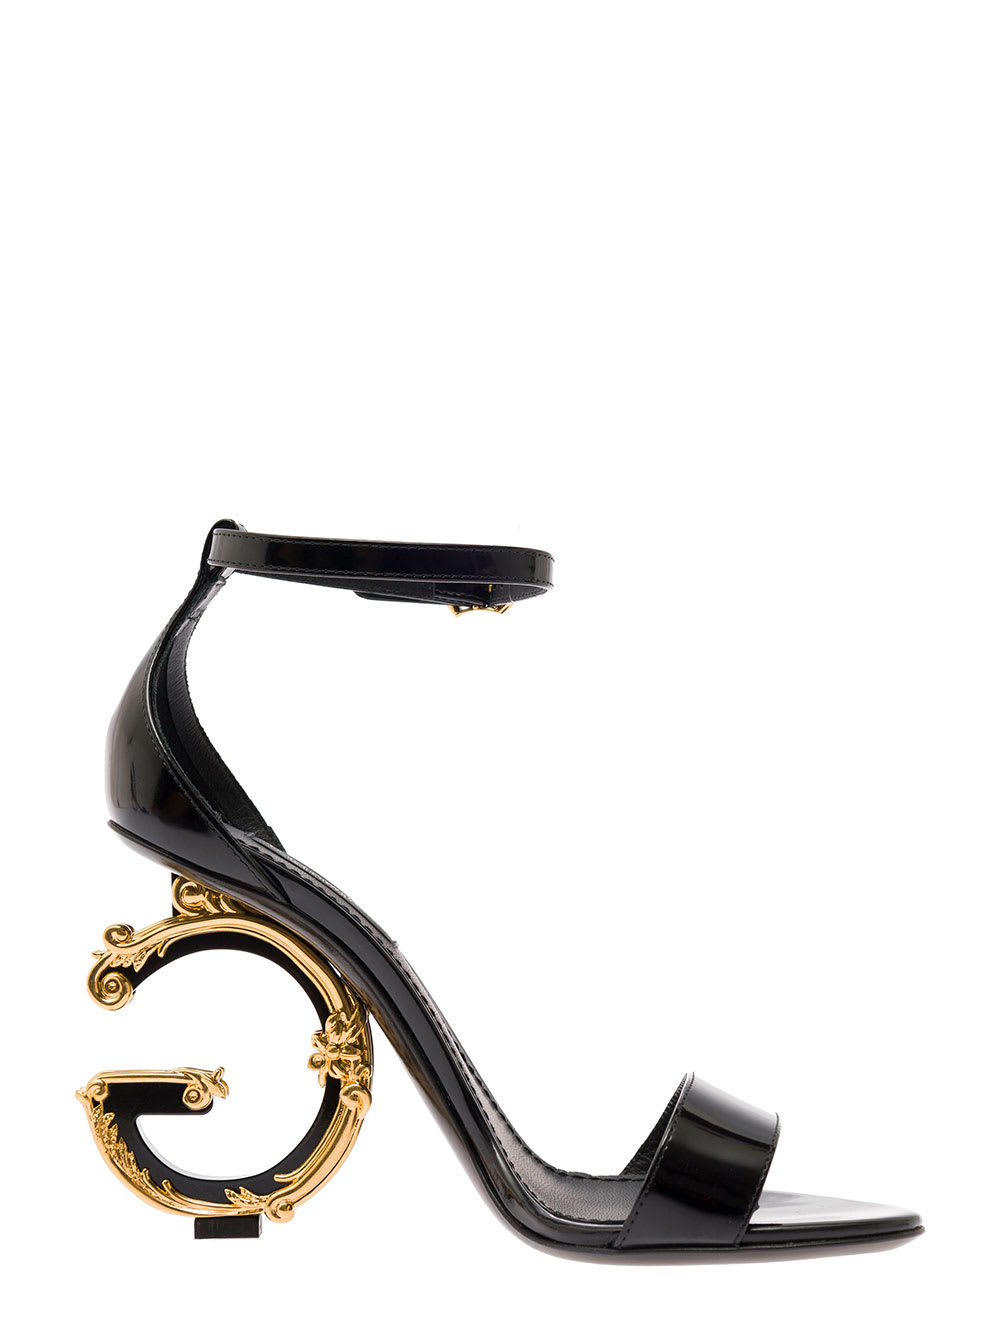 Dolce & Gabbana Womans Black Leather Baroque Sandals